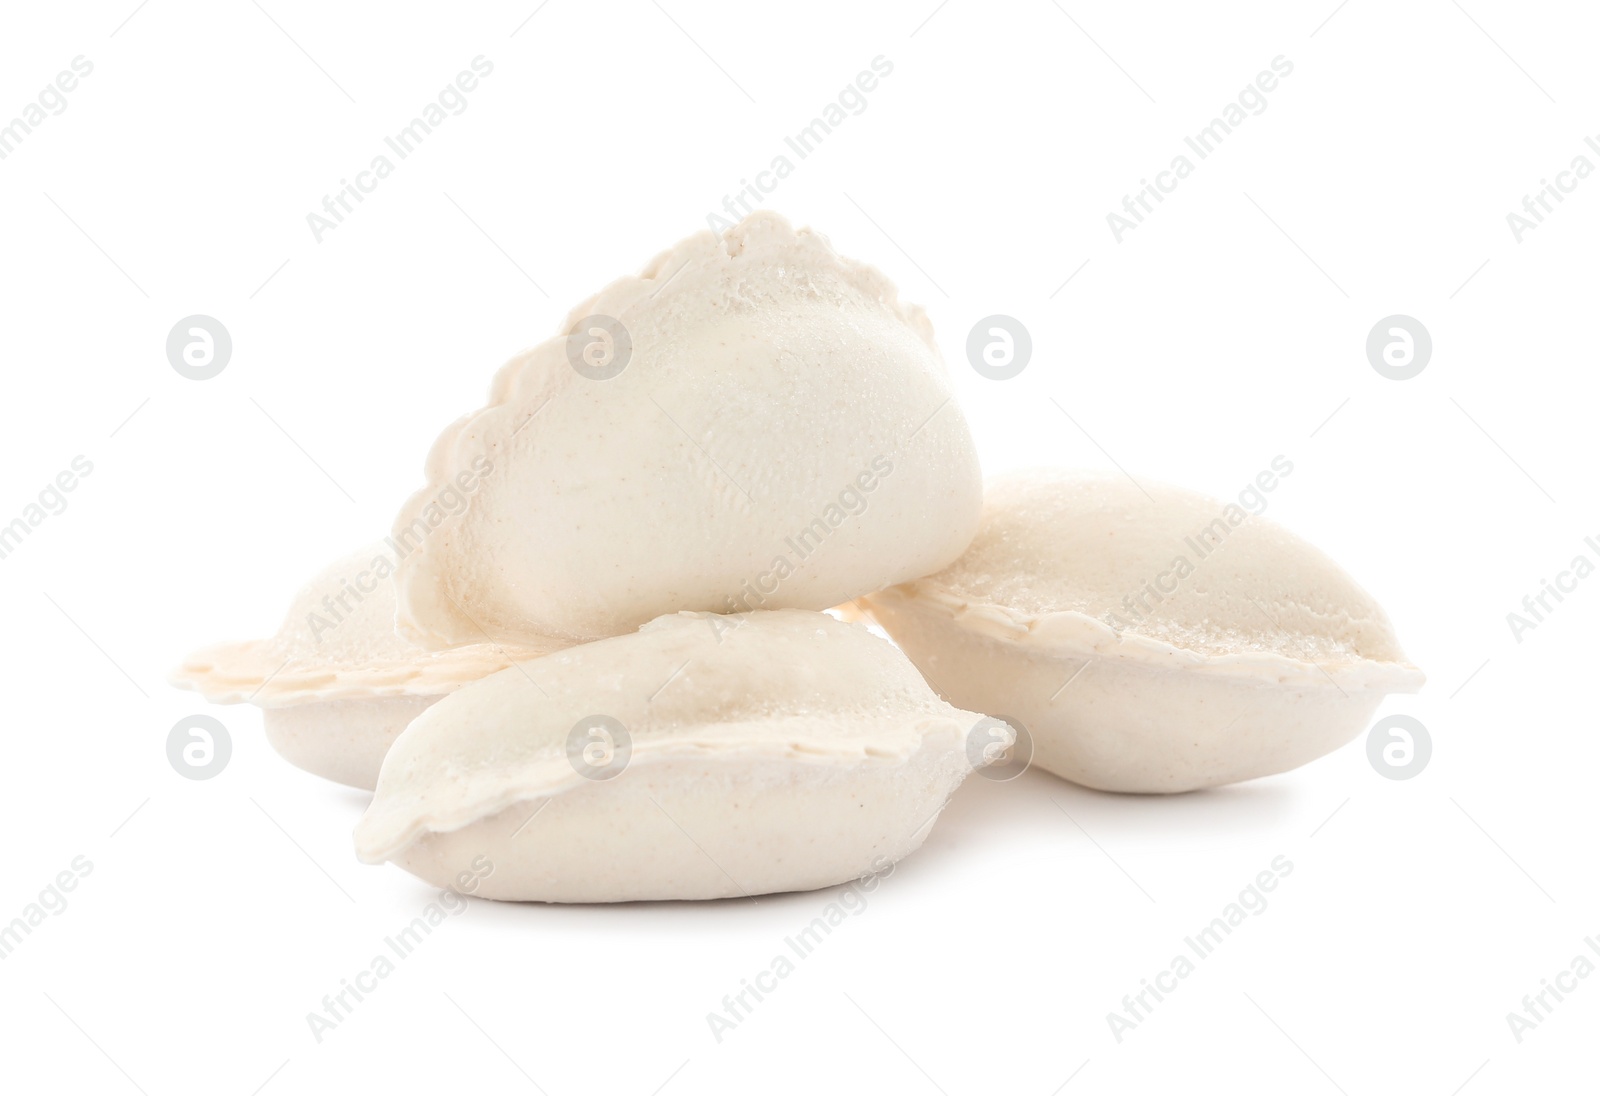 Photo of Heap of raw dumplings on white background